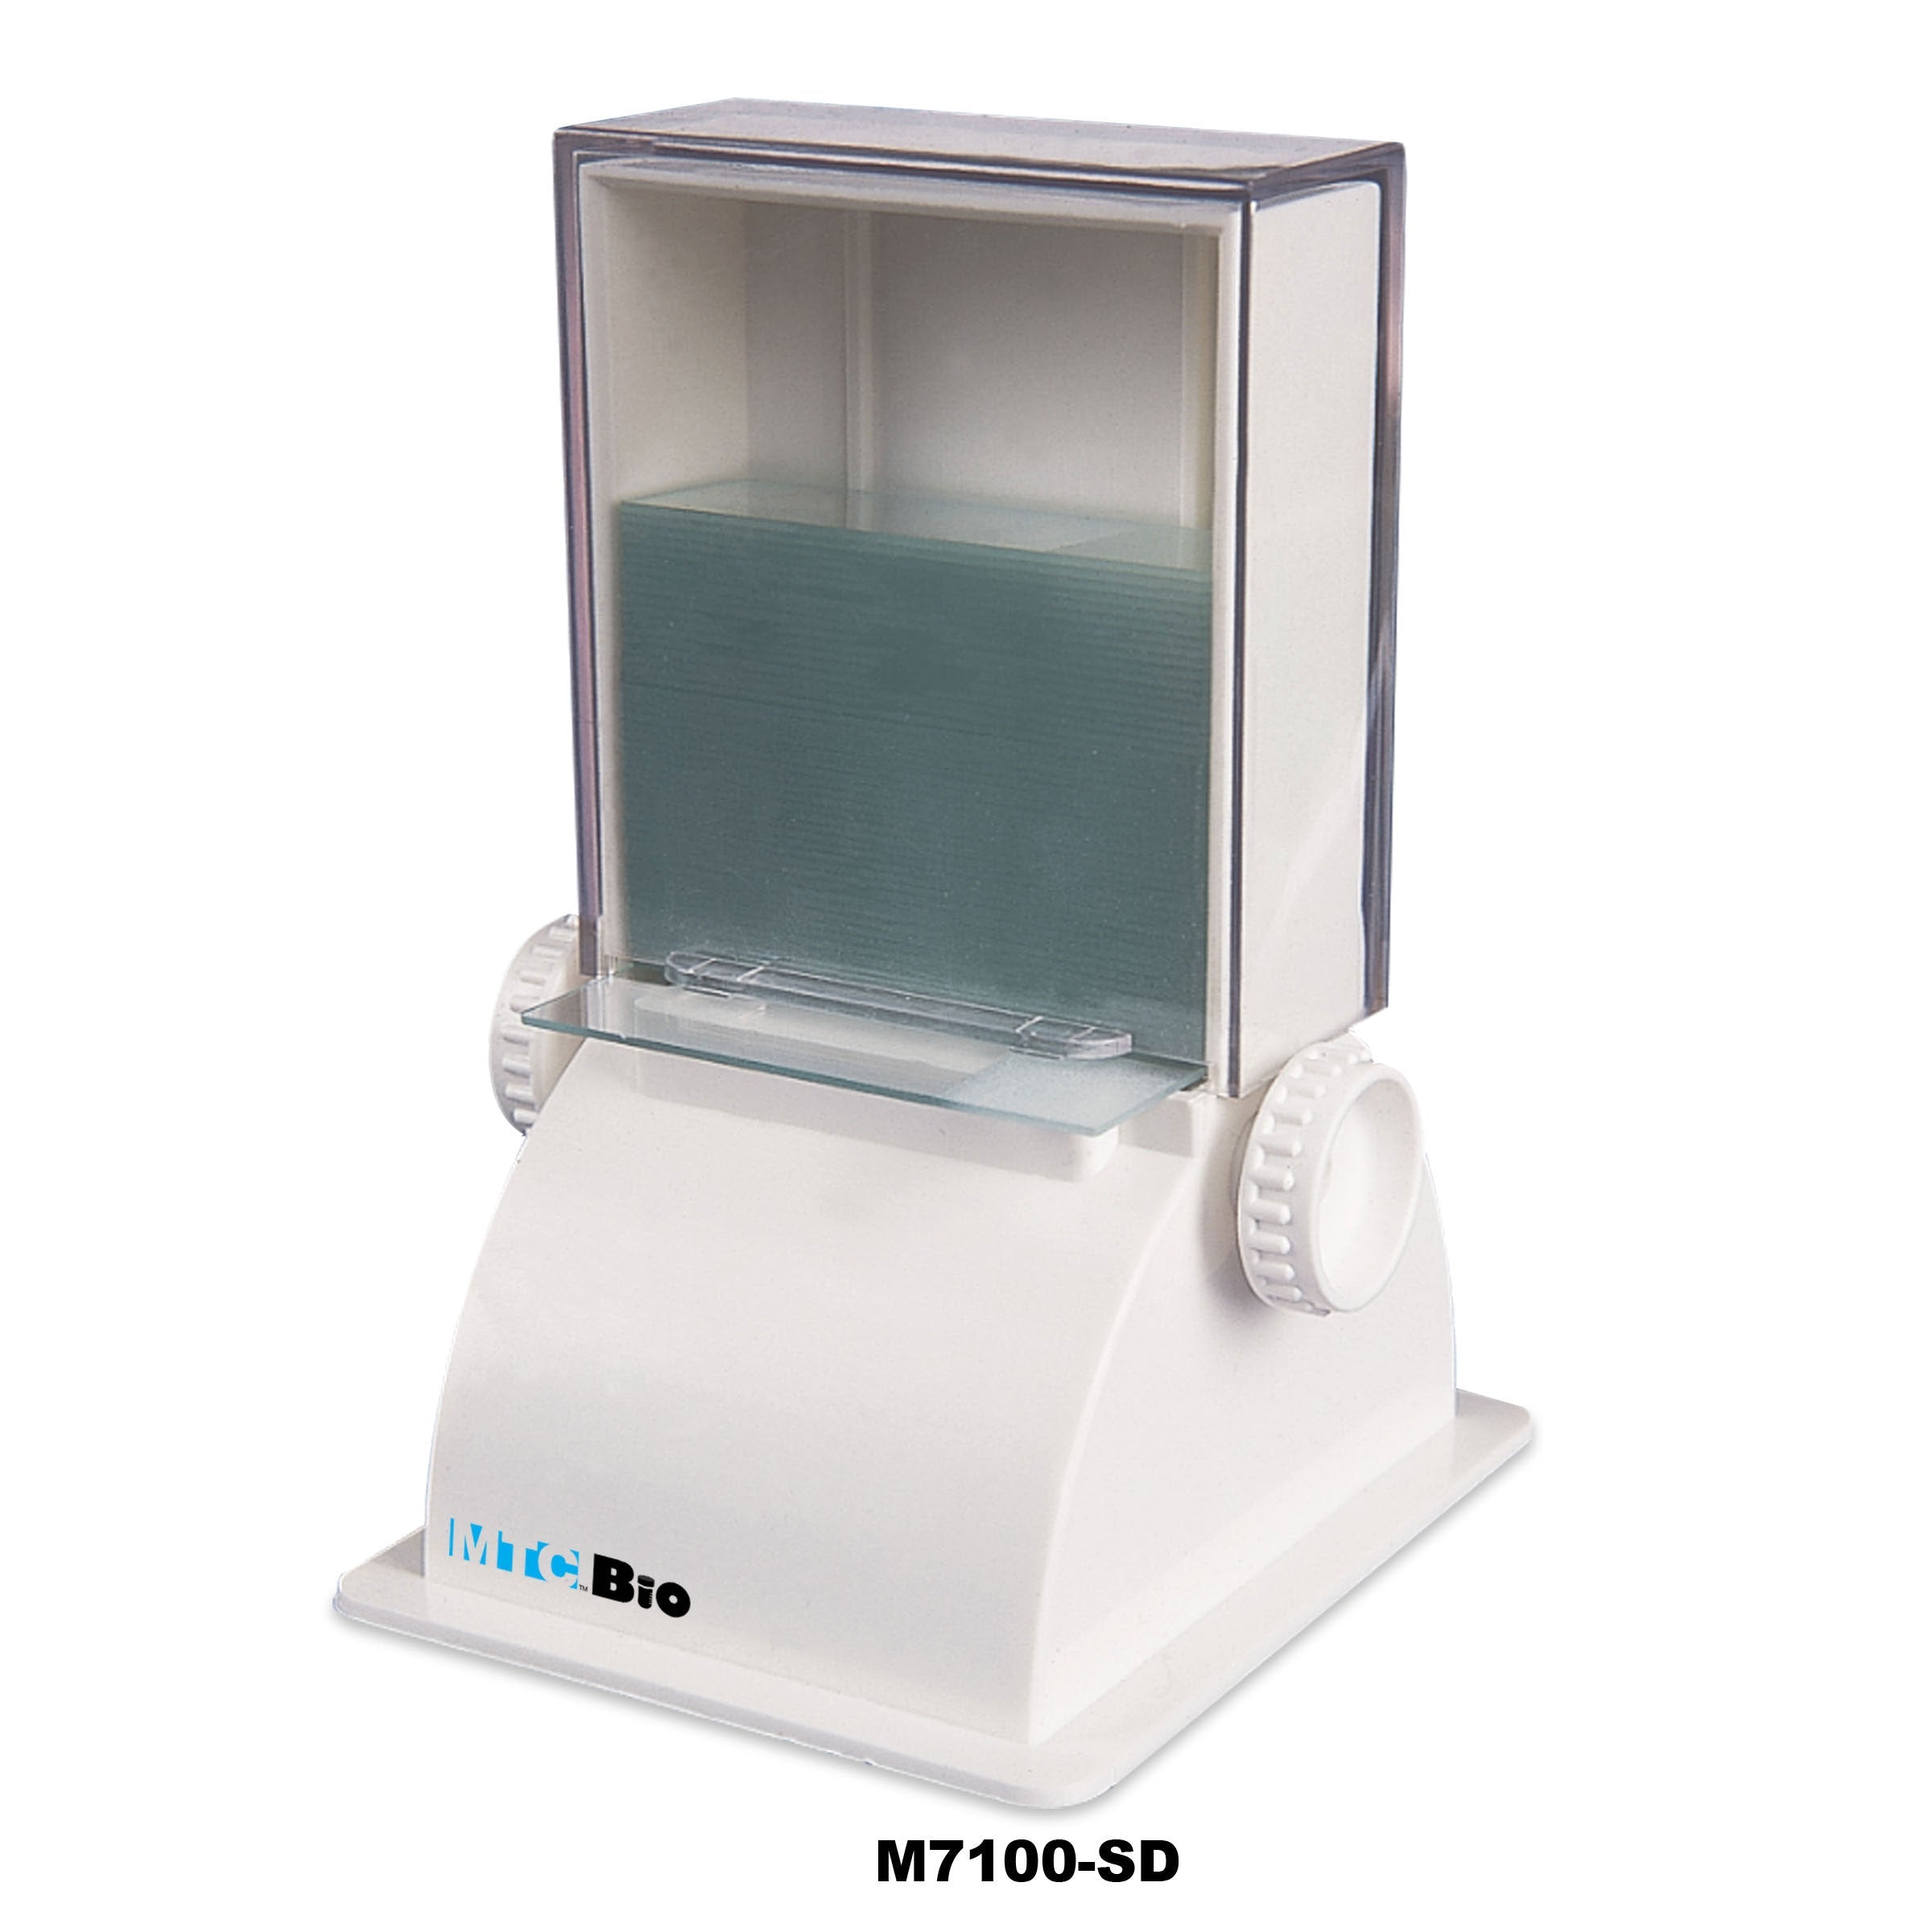 MTC Bio M7100-SD, Microscope Slide Dispenser for Box of 72 Standard 25 x 75mm Slides, 1/Ea